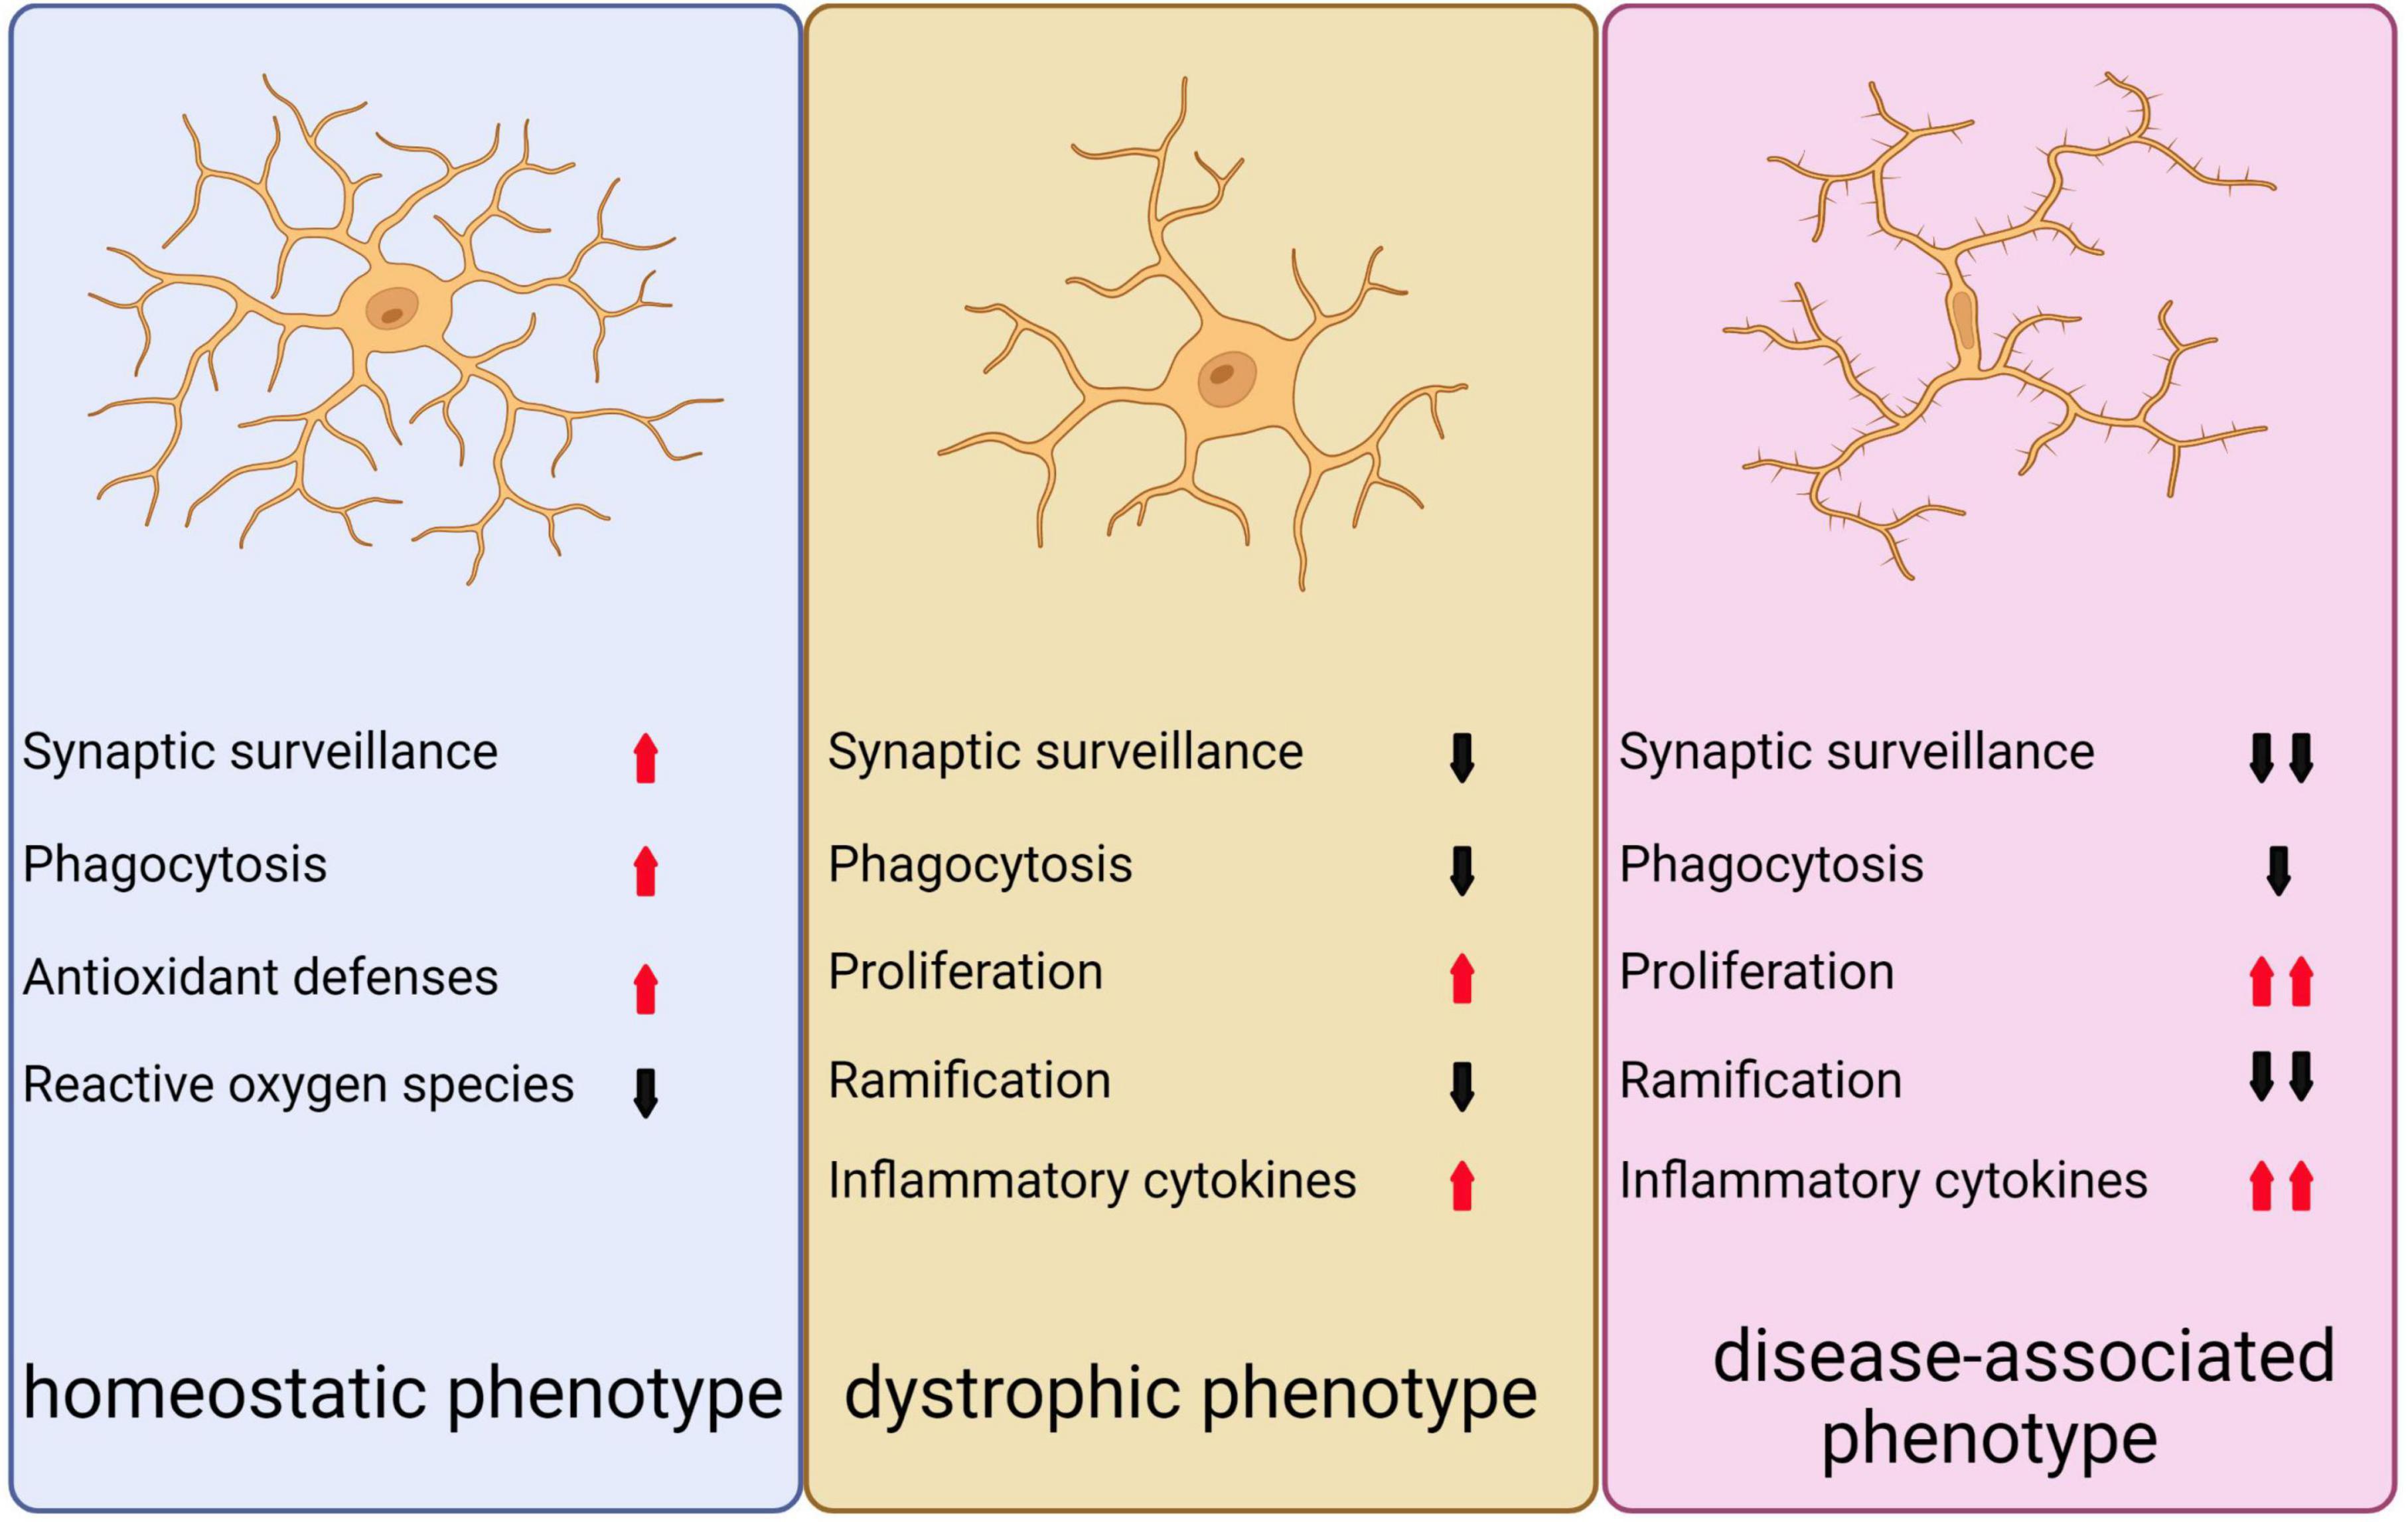 Frontiers  Microglia in Alzheimer's disease: pathogenesis